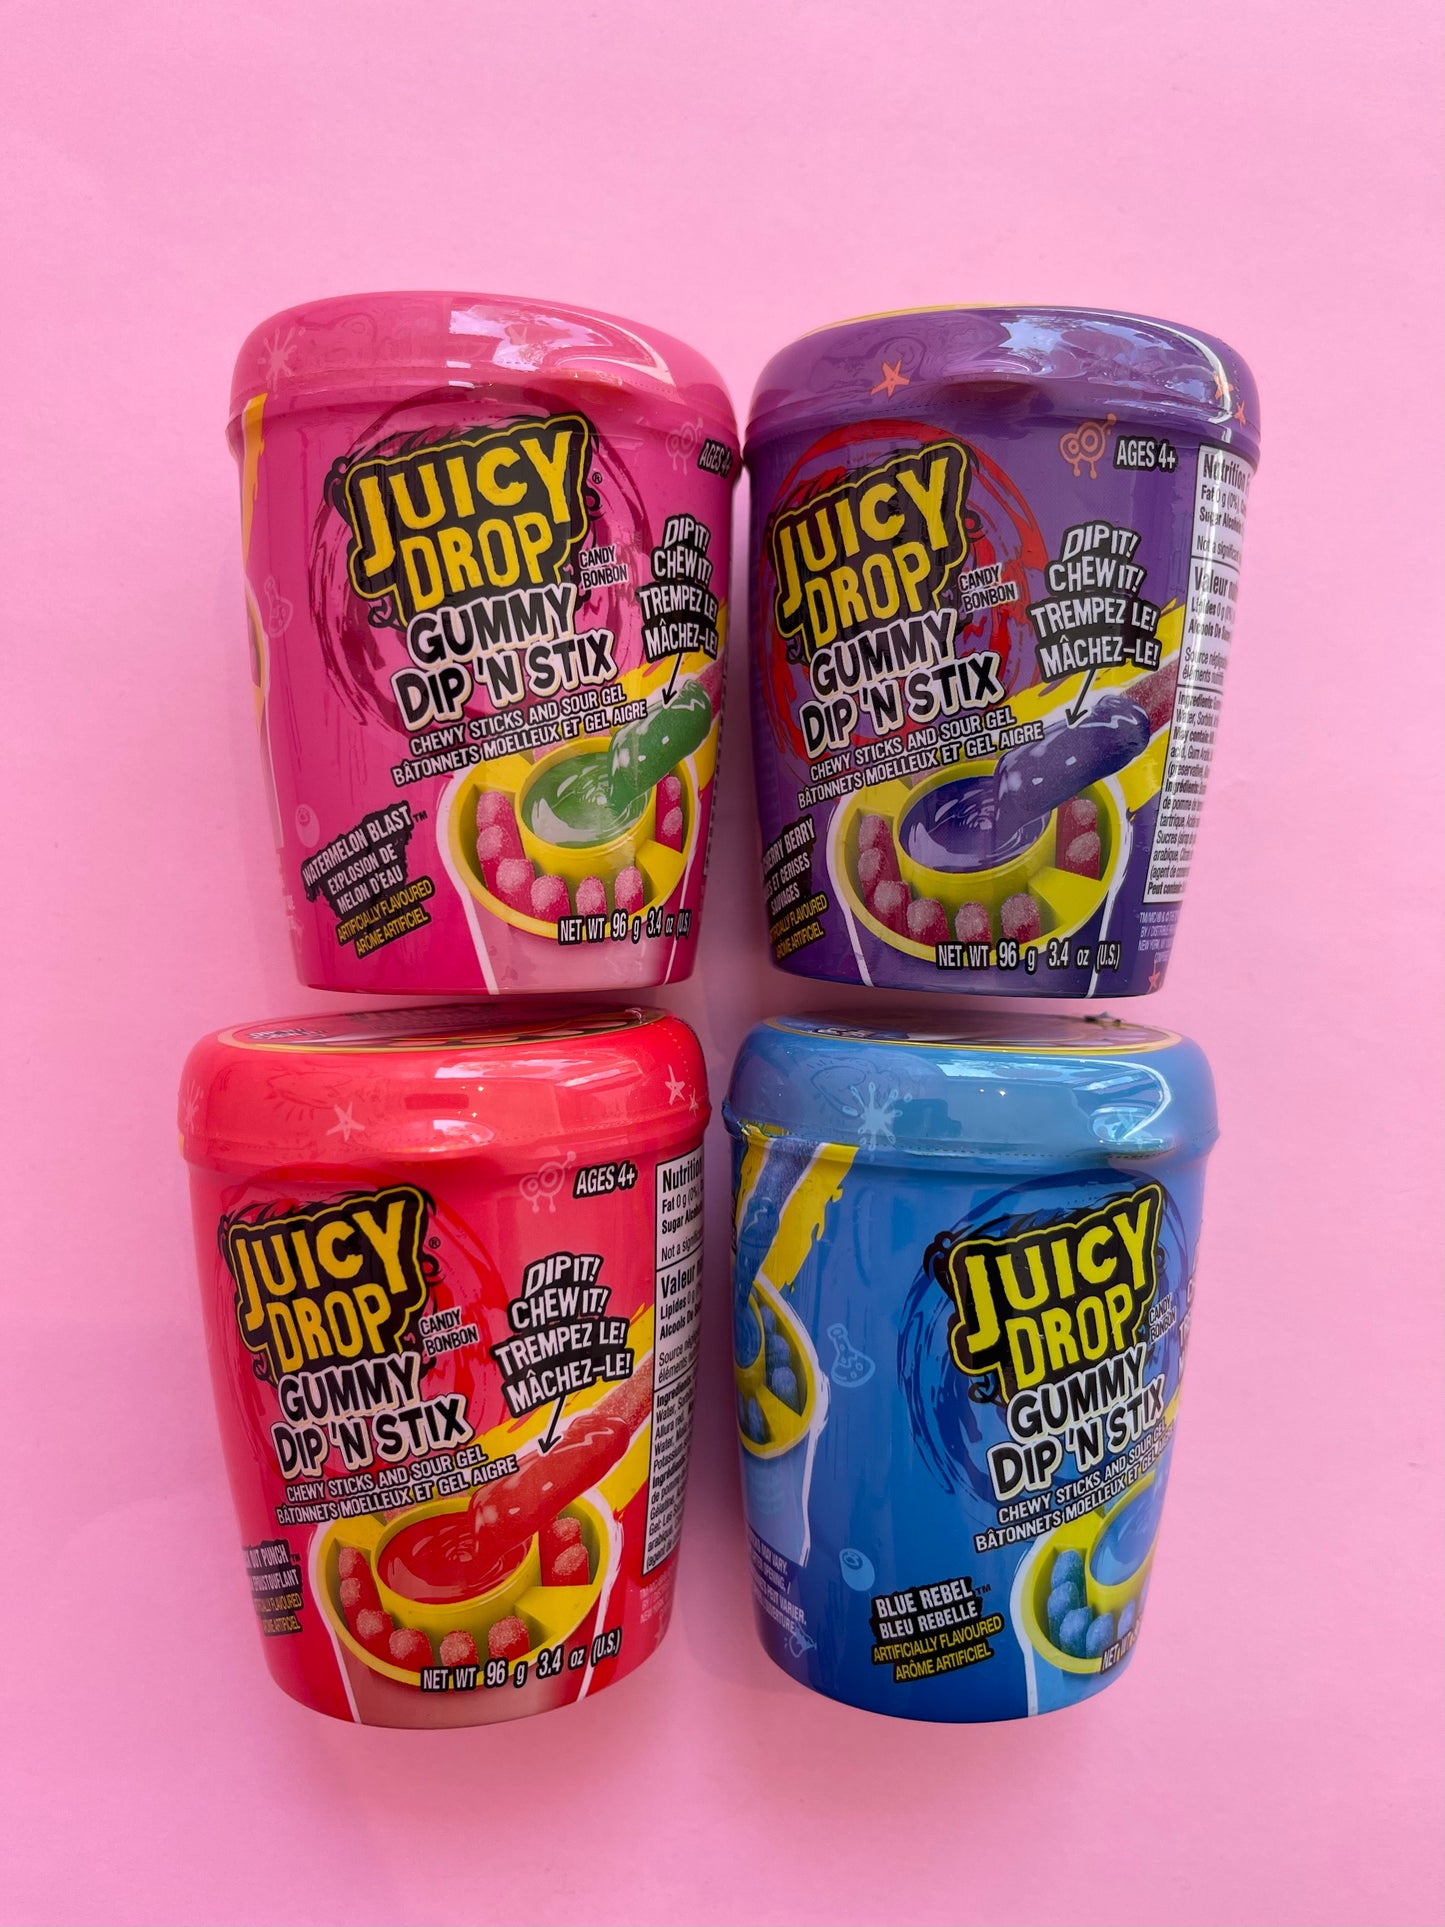 Juicy Drop Gummy Dip ‘N Stix - viral TikTok candy